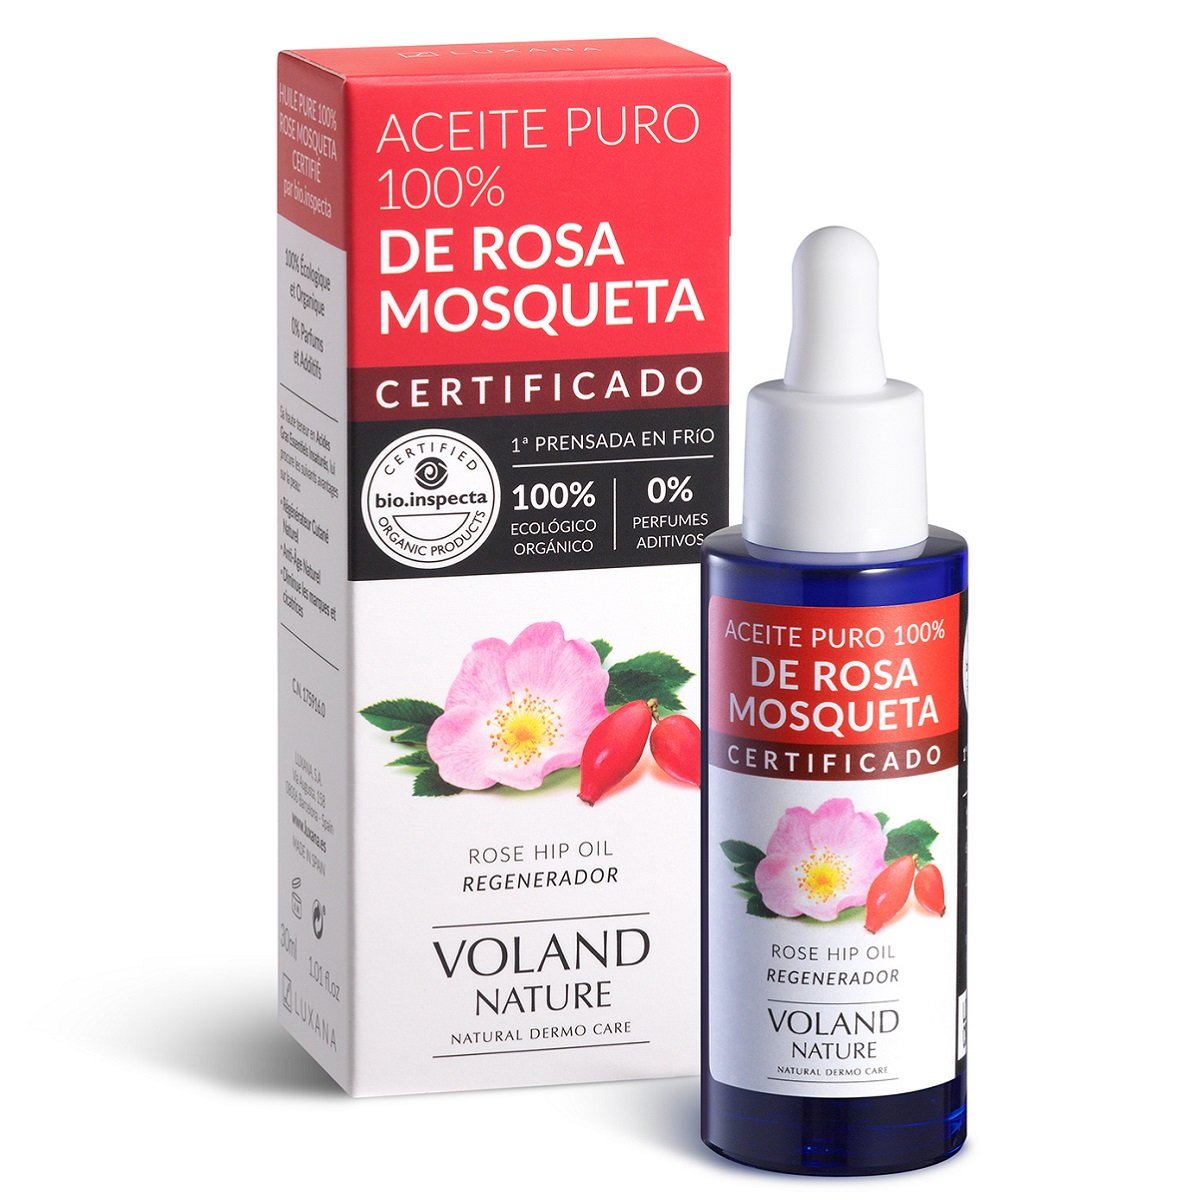 MONPLER Voland nature olejek różany 30 ml + ASAKI uchwyt na reklamówki GRATIS !